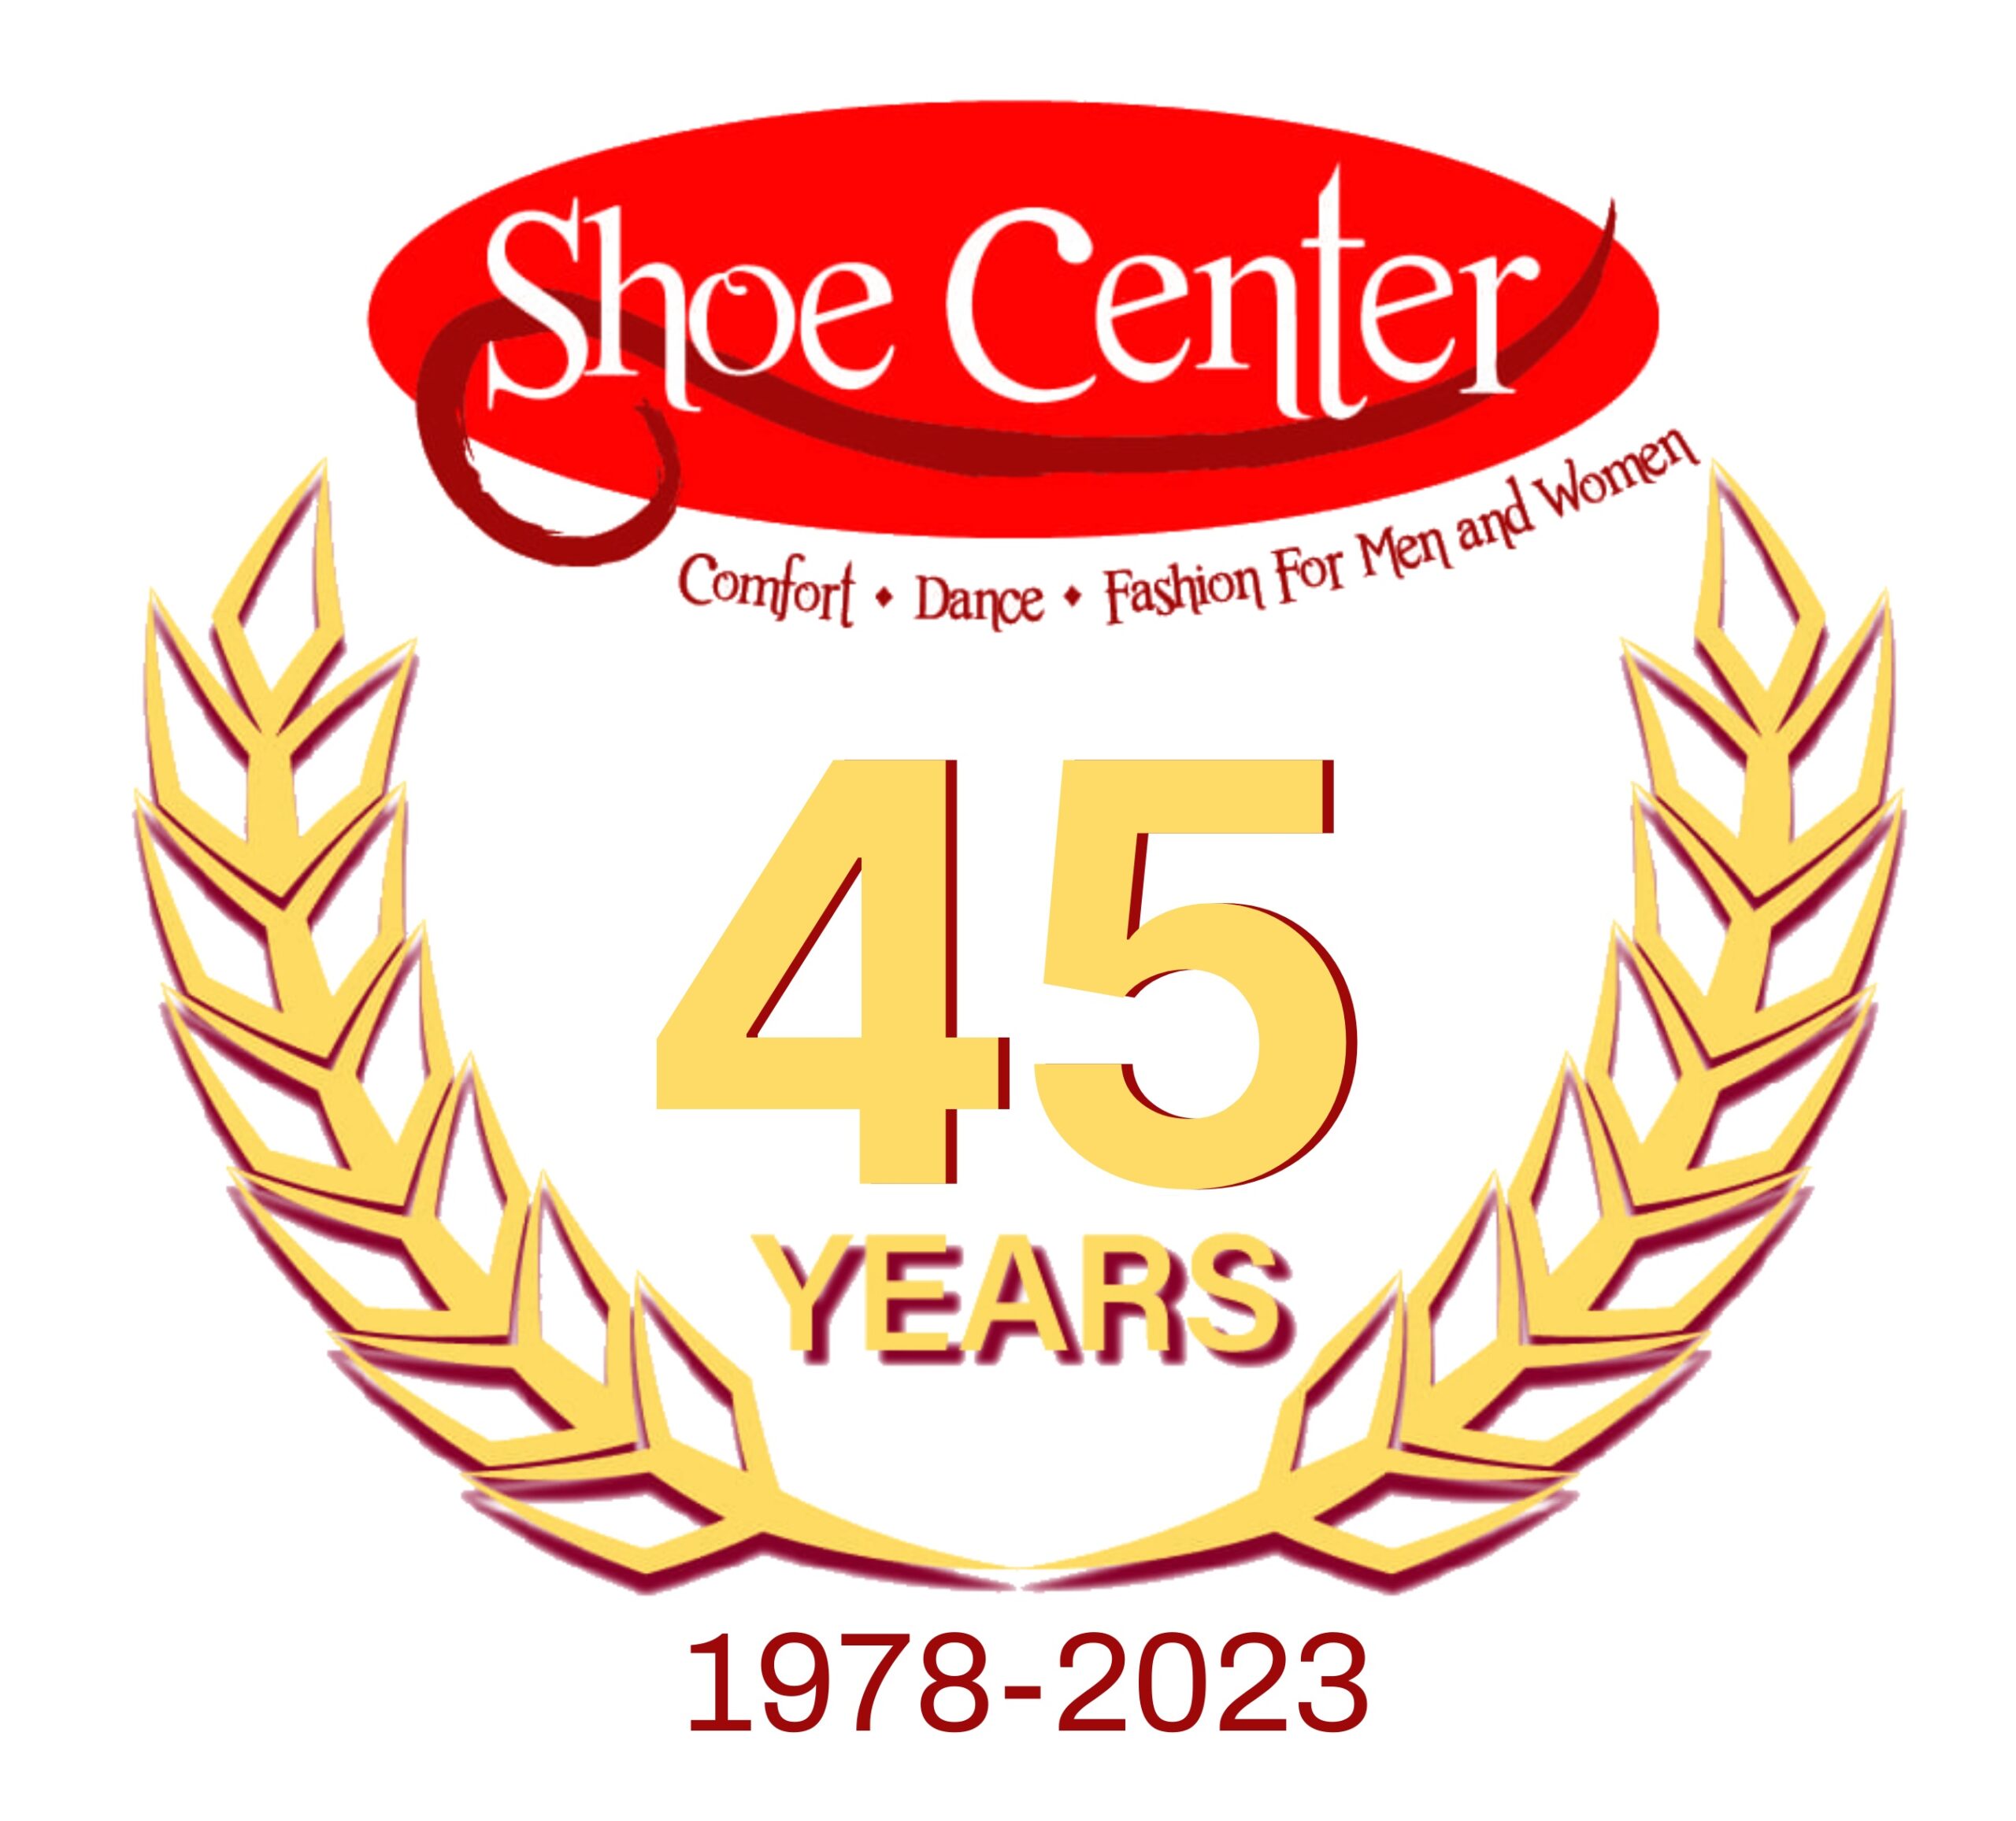 The Shoe Center